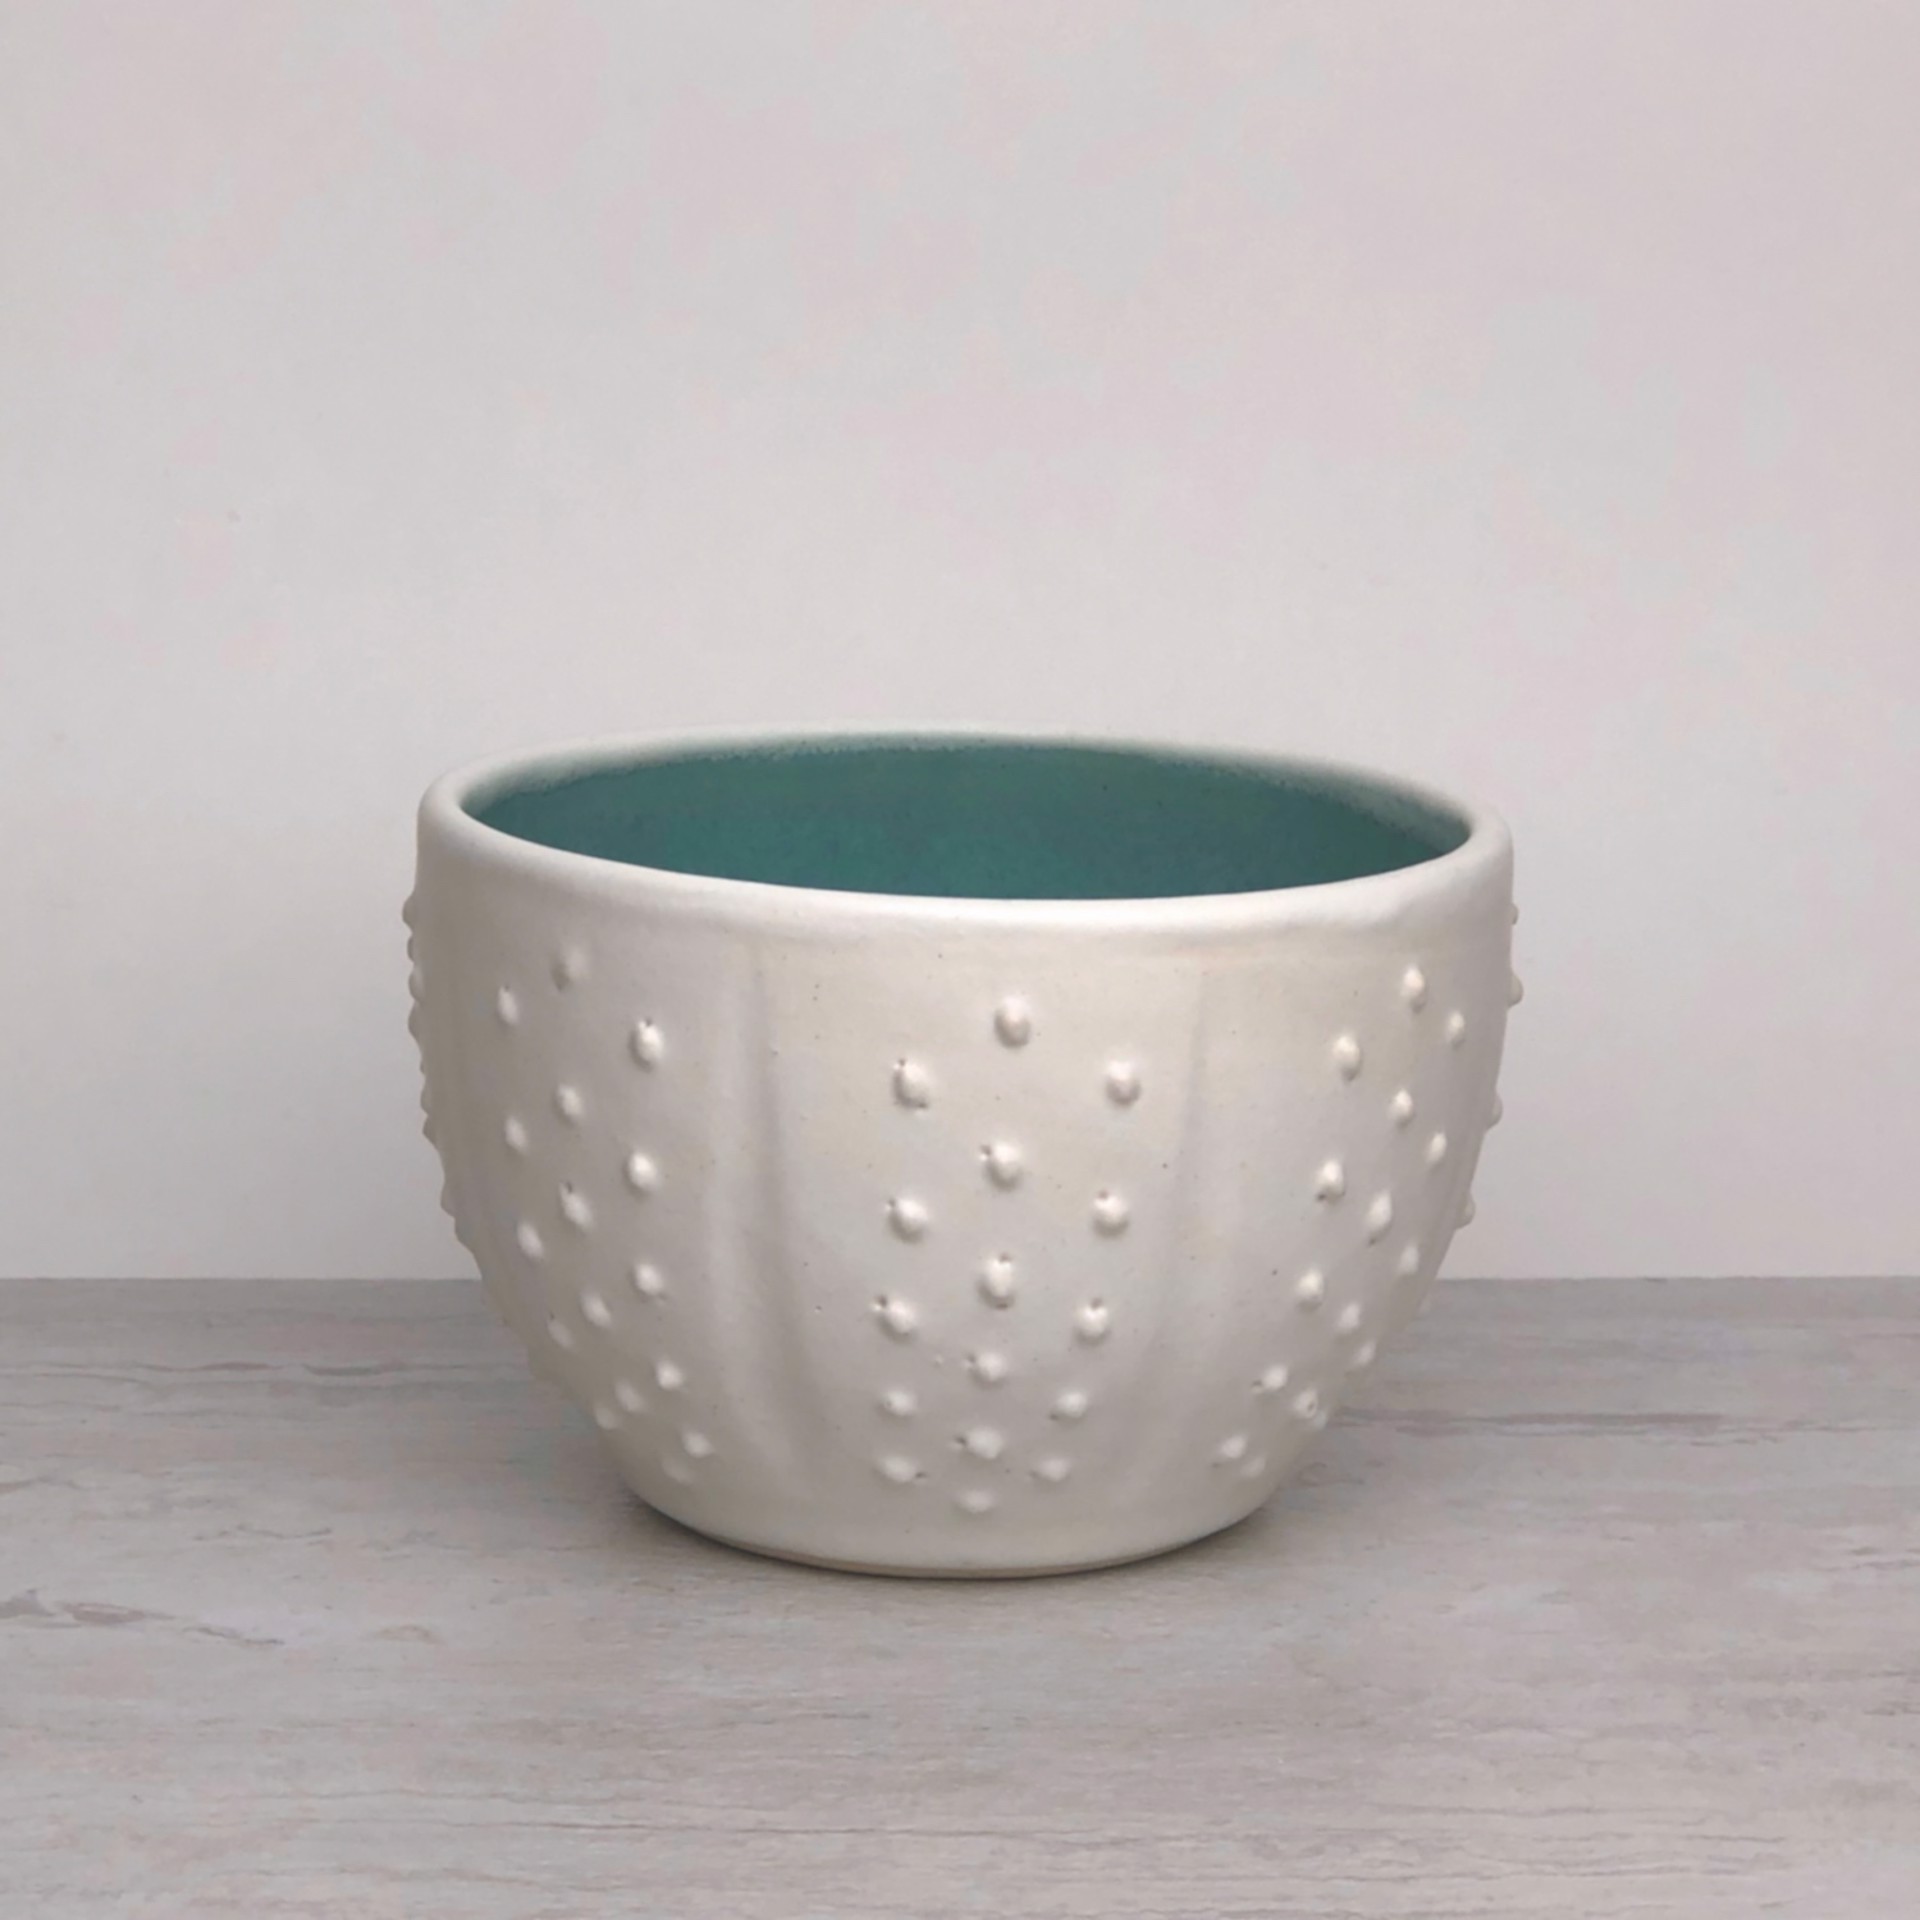 #25 urchin sherbet bowl by Leah Streetman